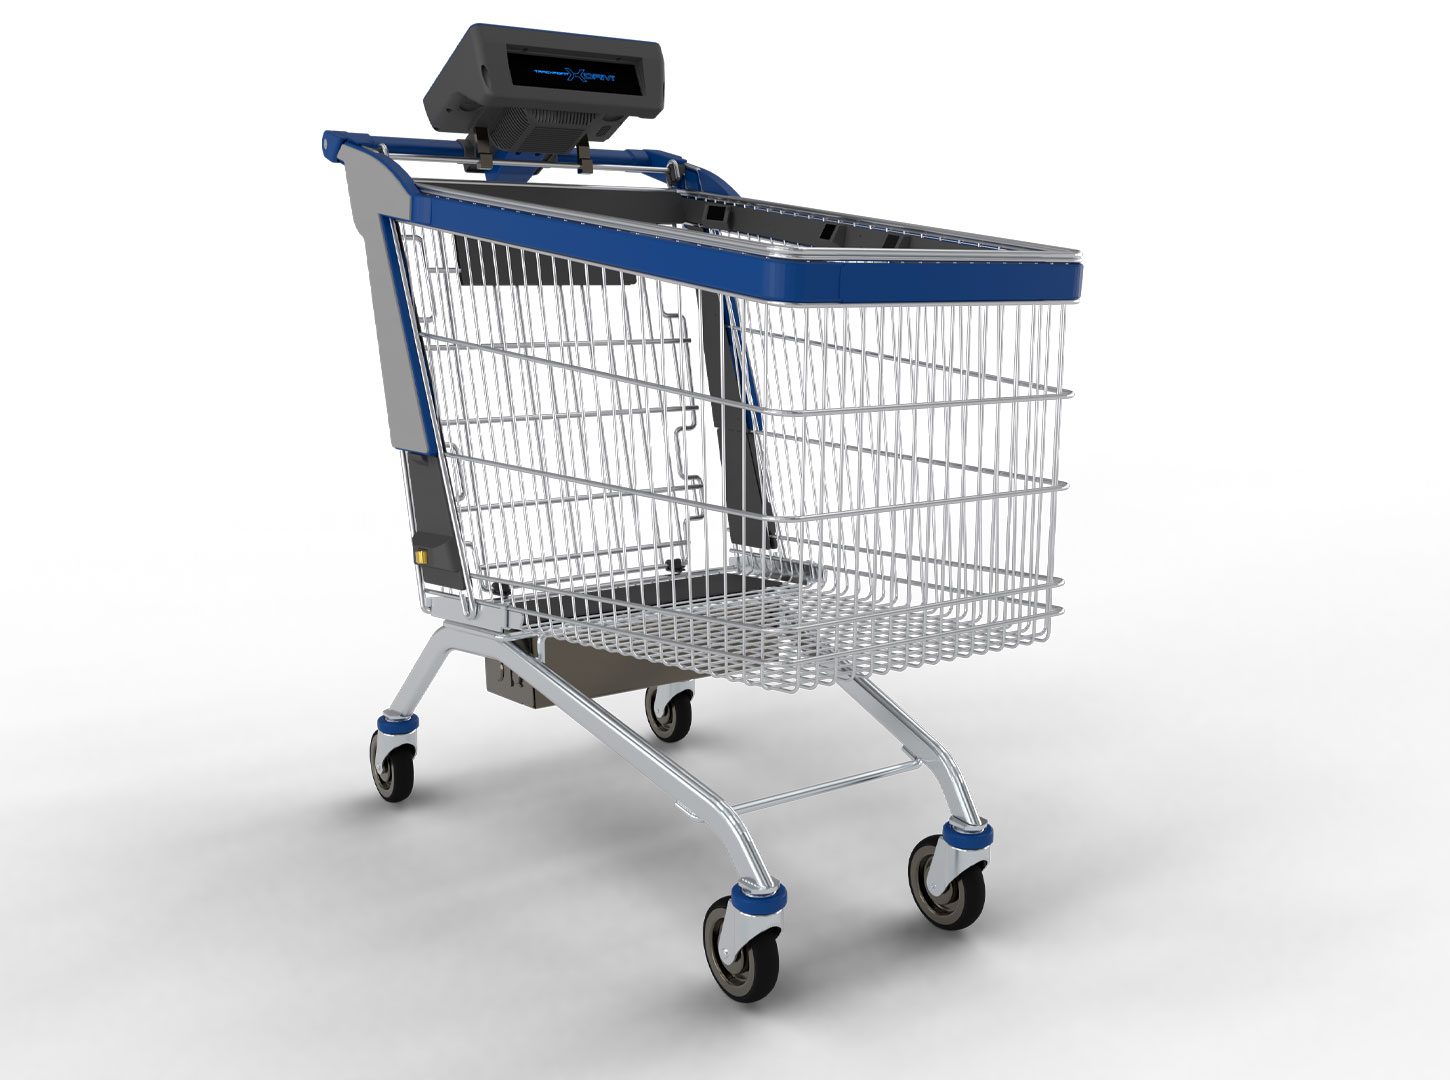 Tracxpoint's Daivi Gen 3 Hybrid smart shopping cart